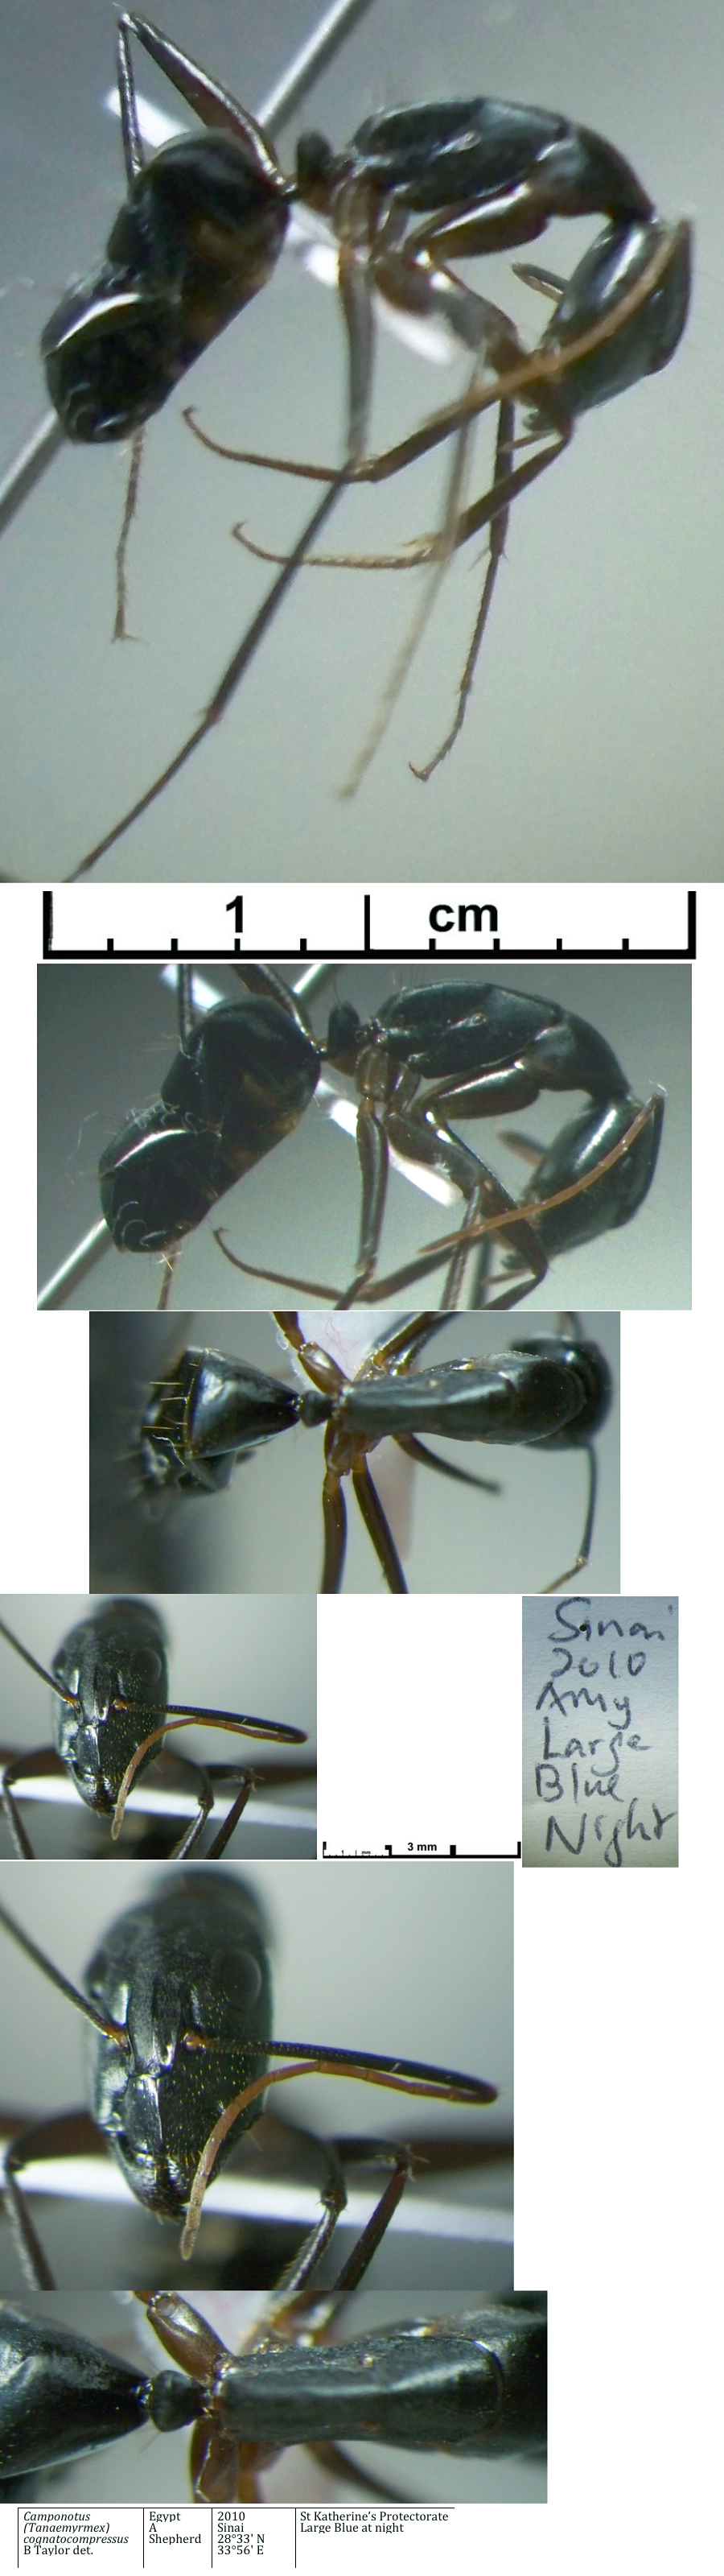 {Camponotus cognatocompressus minor}